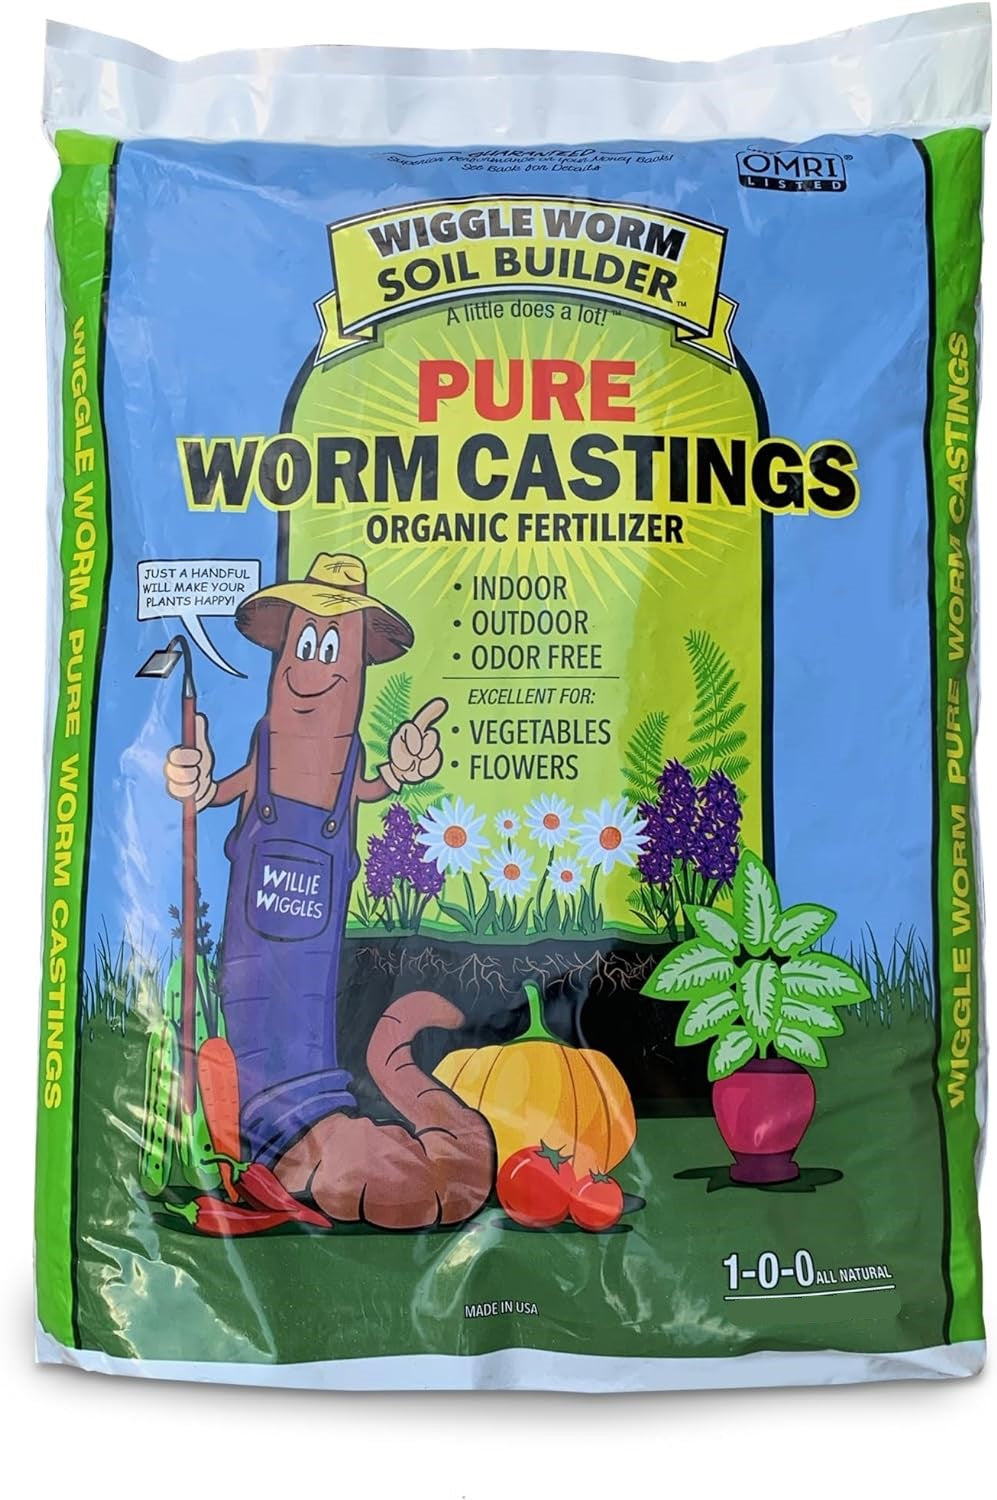 WIGGLE WORM Earthworm Castings Organic Fertilizer